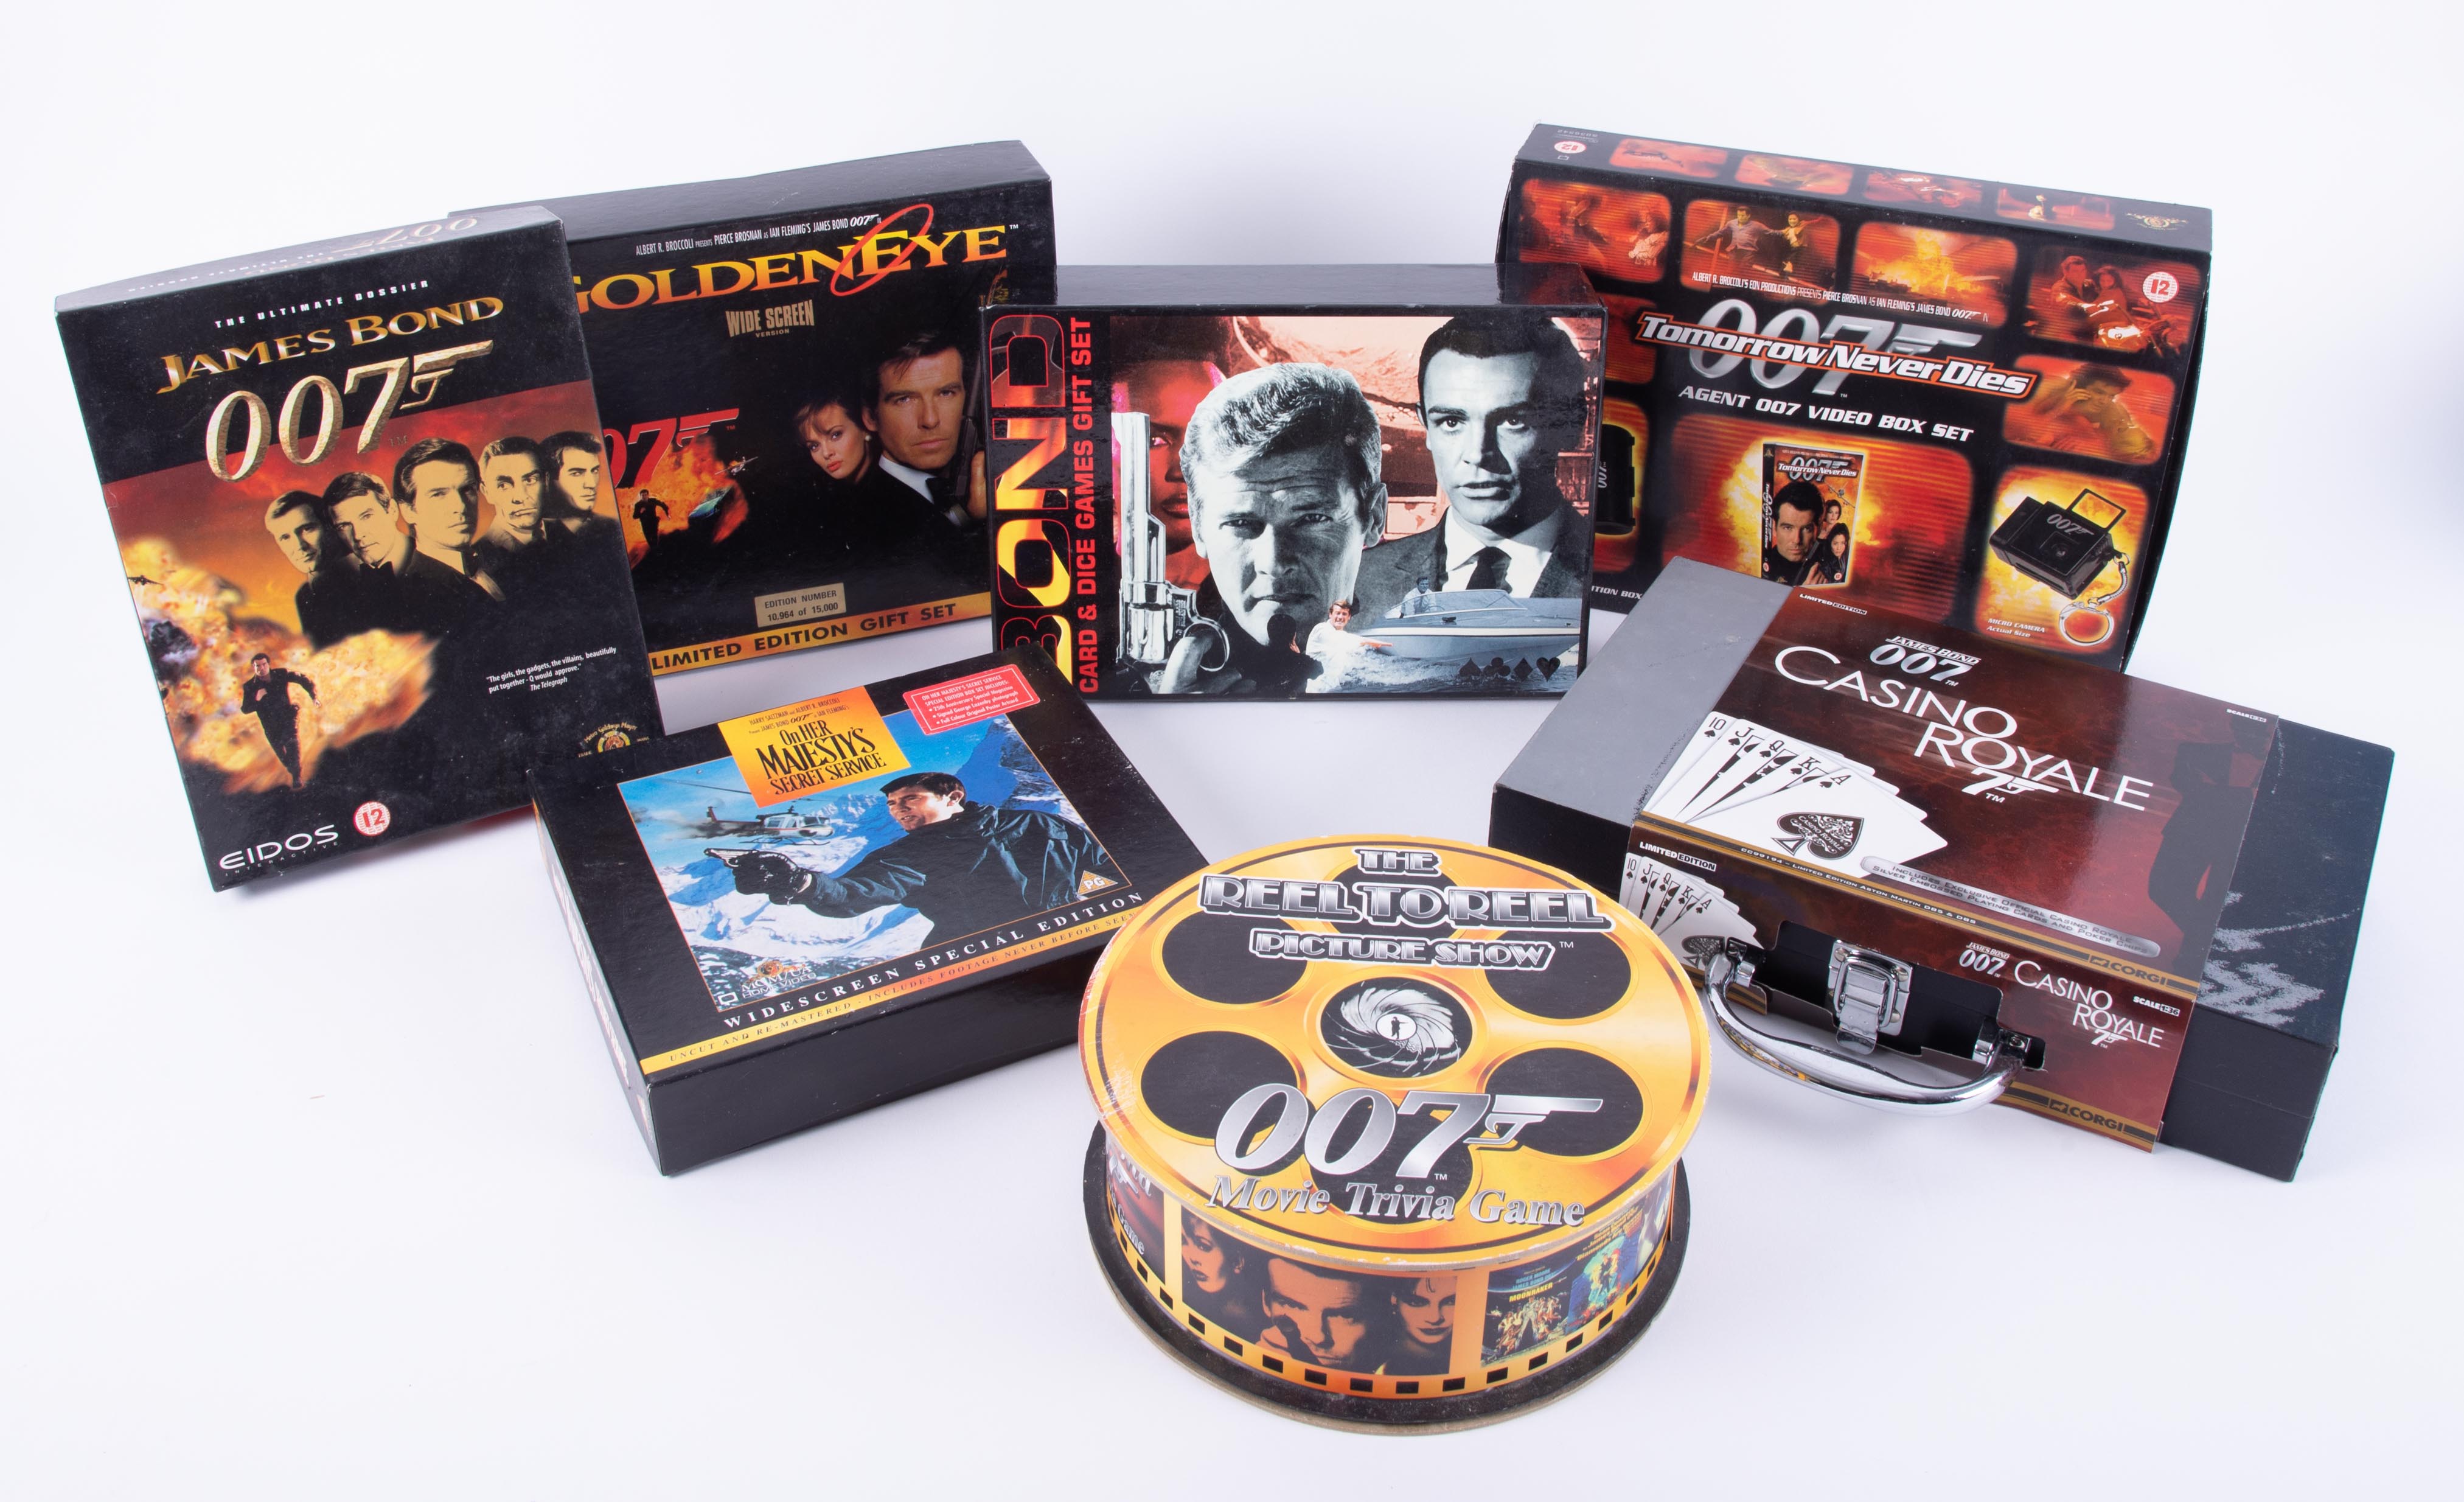 Various James Bond collectables including video box set, Golden Eye edition set, reel to reel